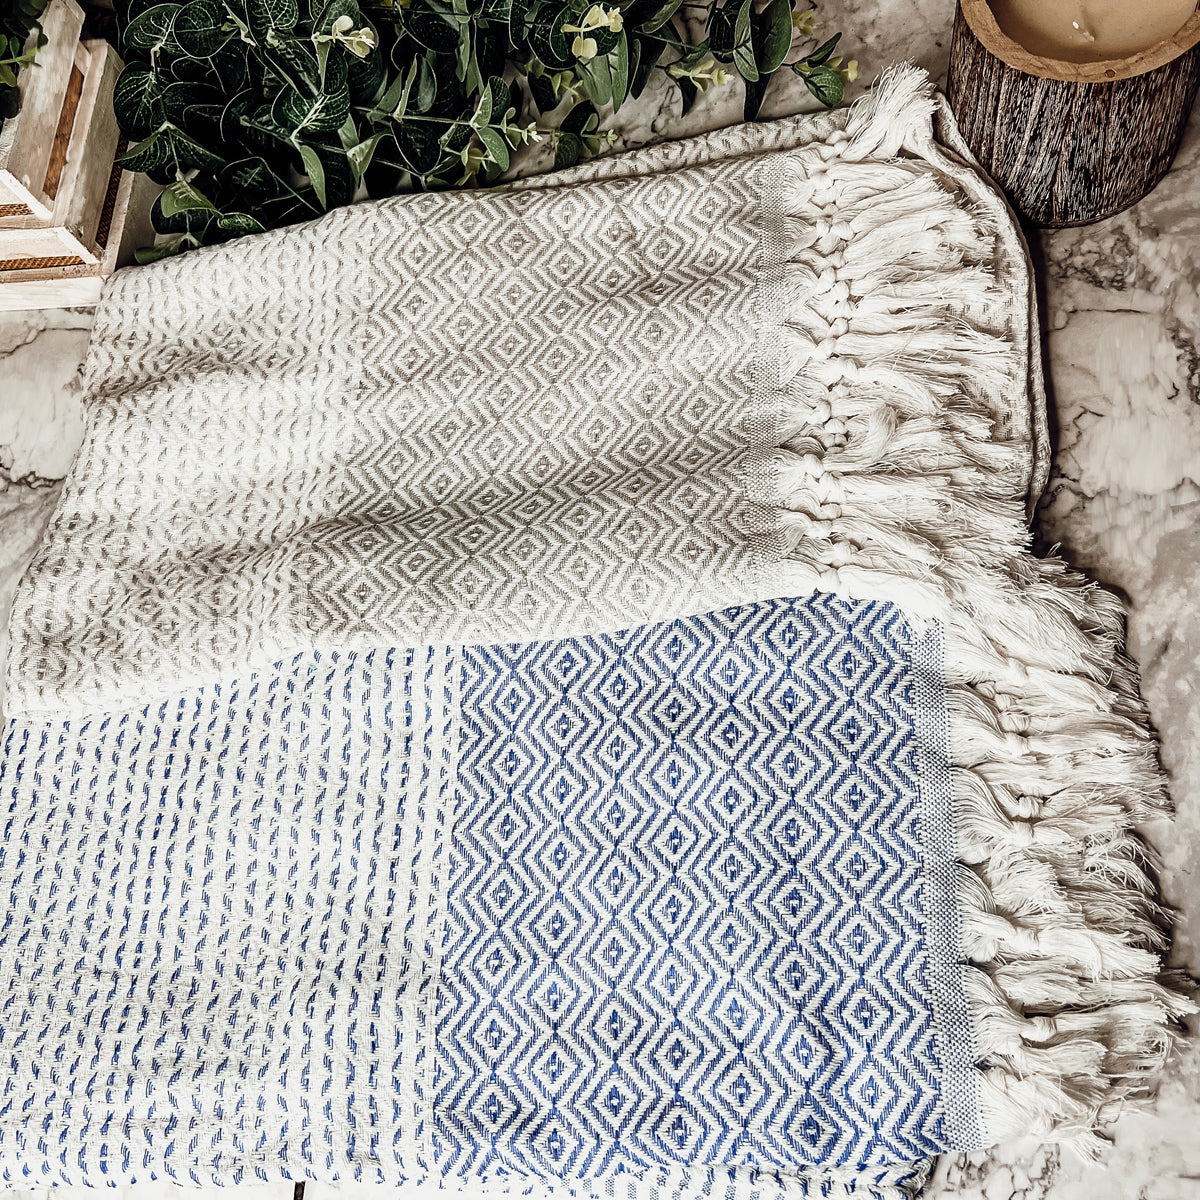 Peshtemal Beach Towels with Tassels - Blue and White